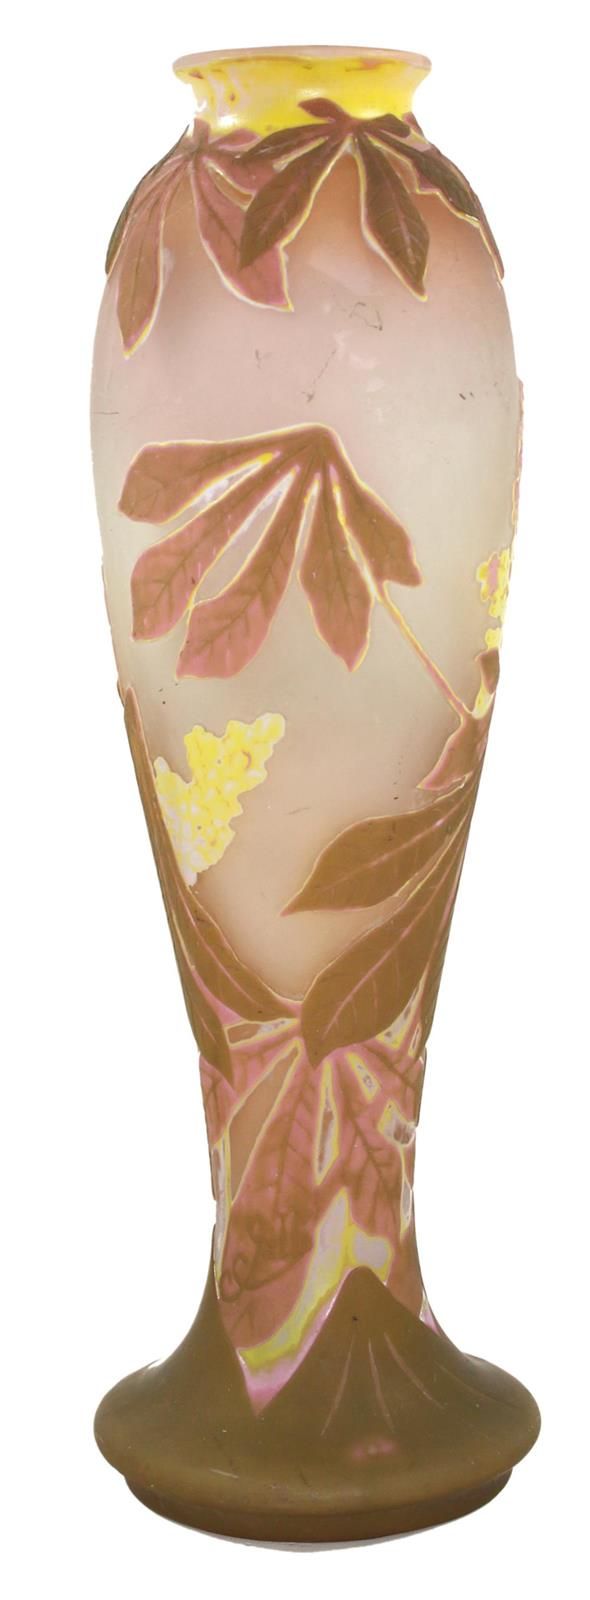 Gallé, Emile Kastanienvase Vase "Marron" Nancy um 1900. Opak-rose, hellbraun u. &hellip;